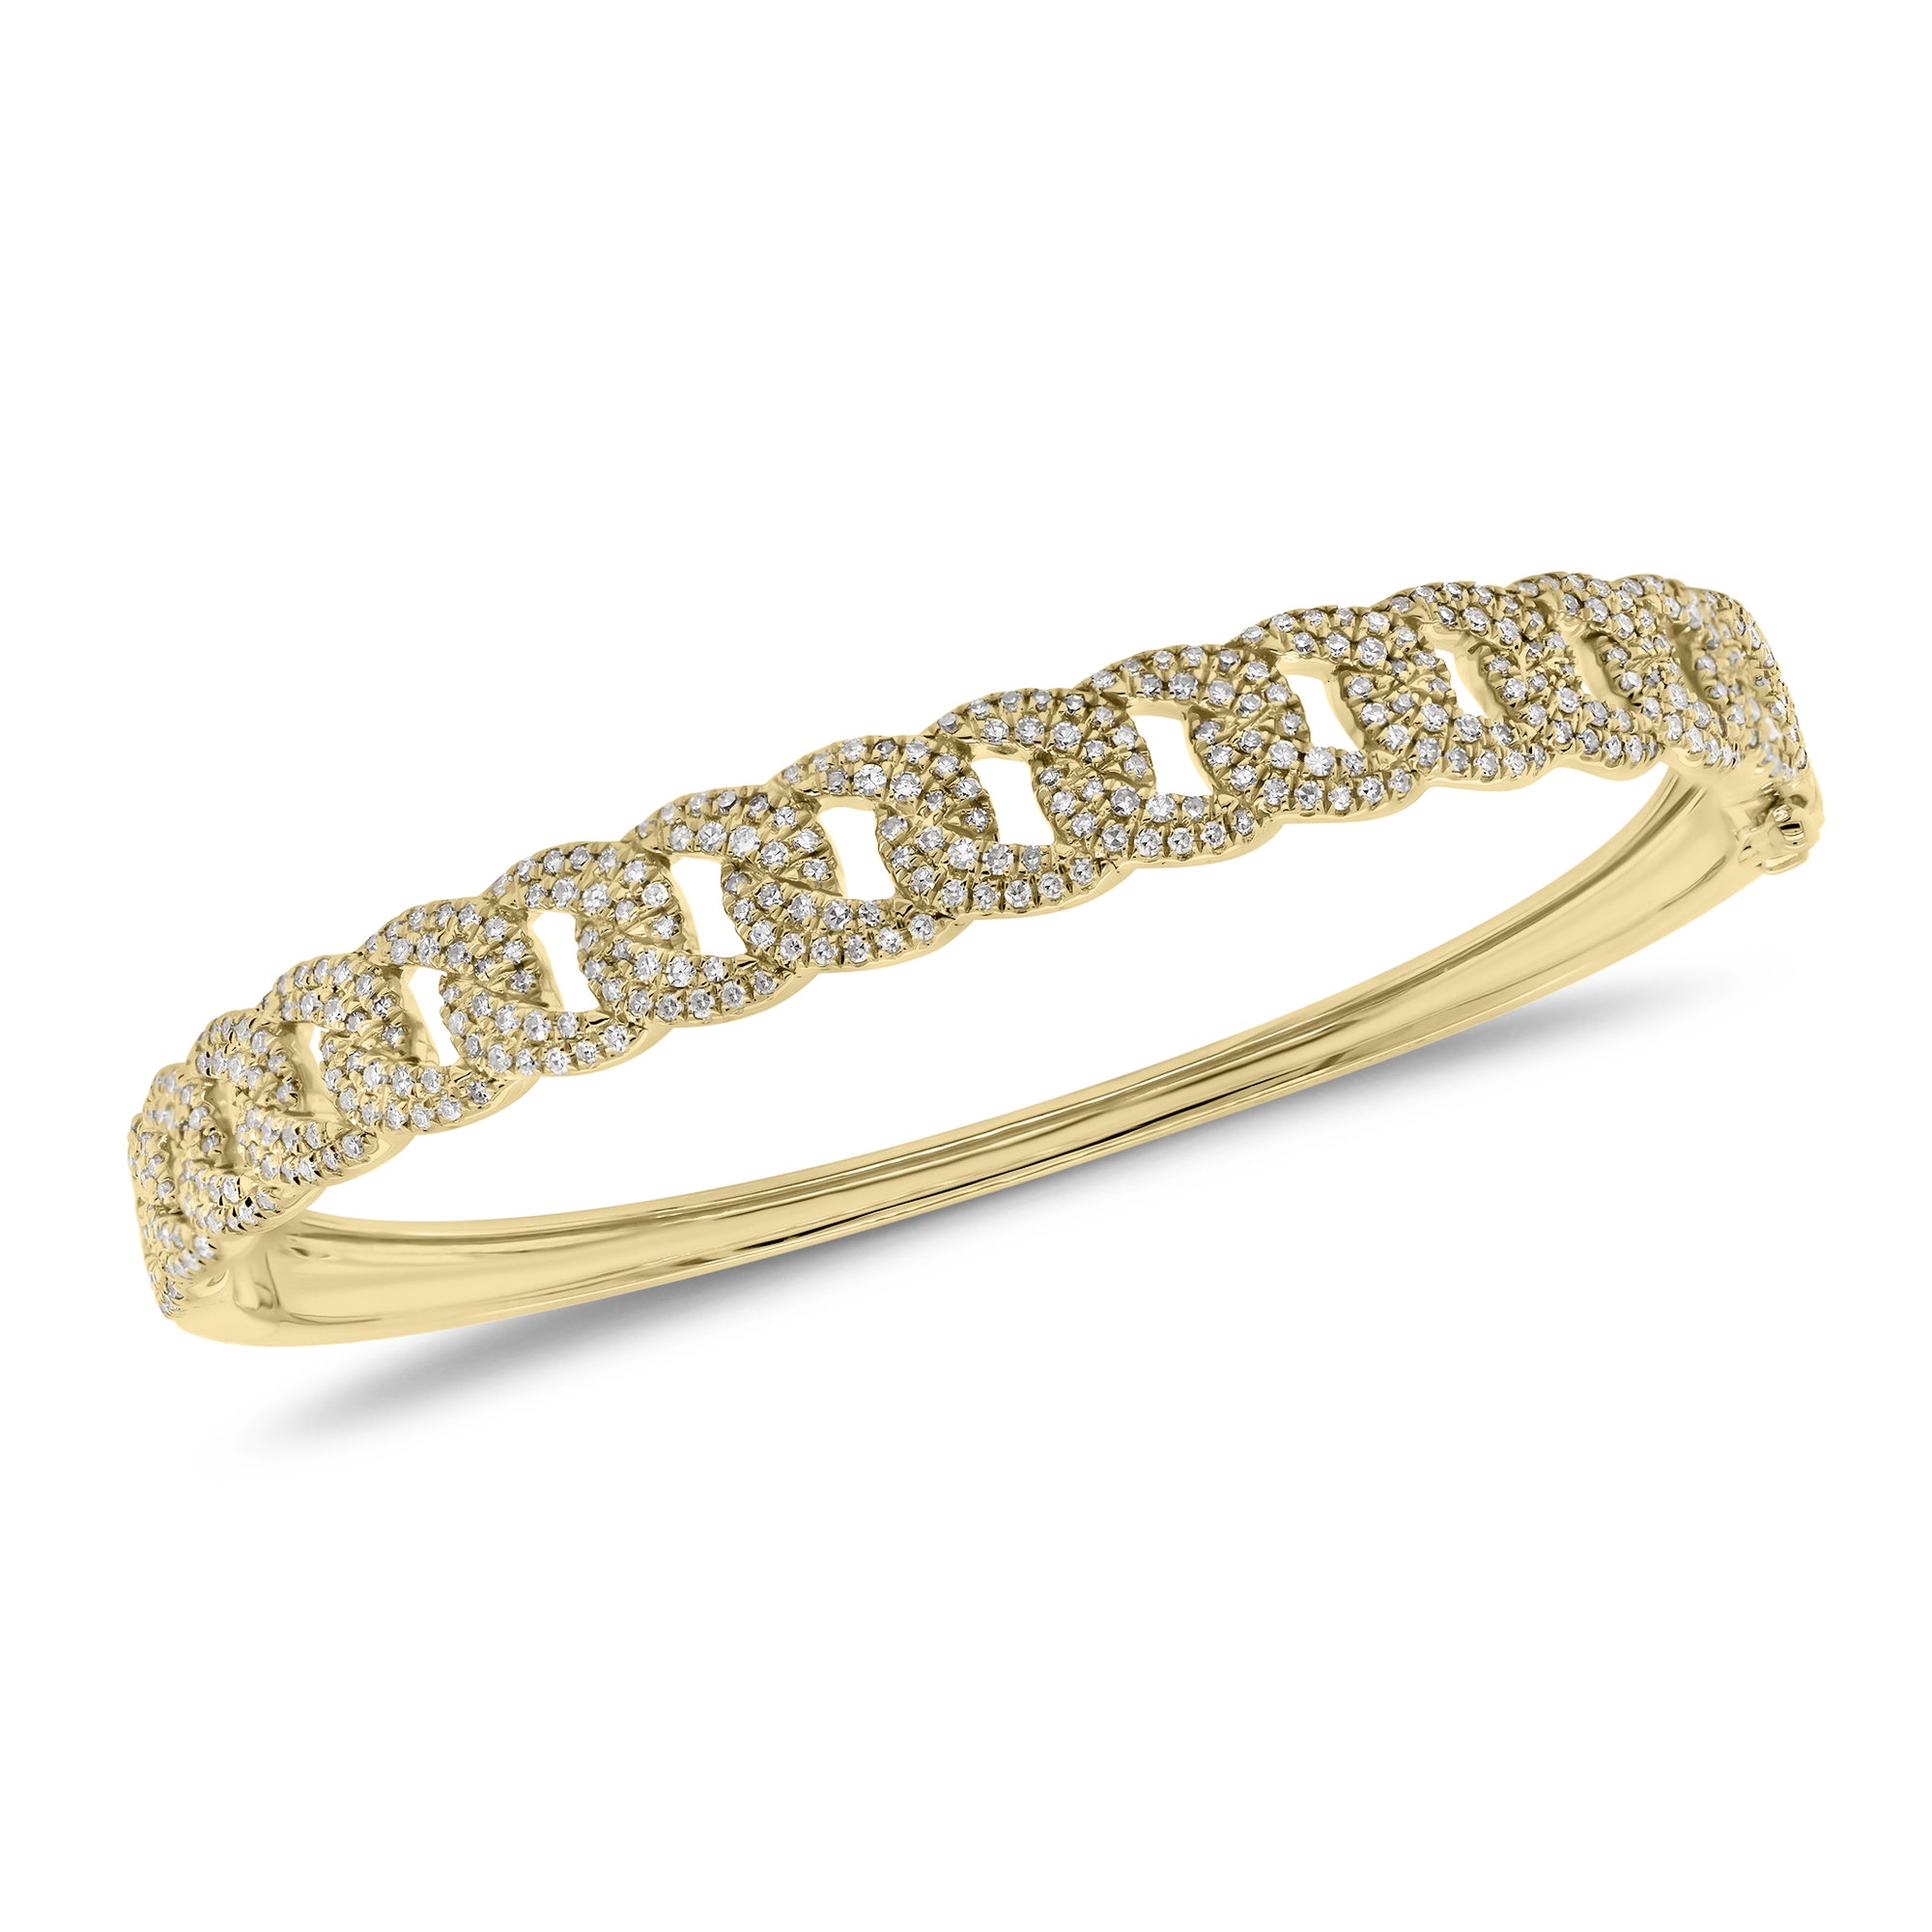 Diamond Curb Chain Bangle Bracelet - 14K yellow gold weighing 15.88 grams  - 374 round diamonds totaling 1.06 carats